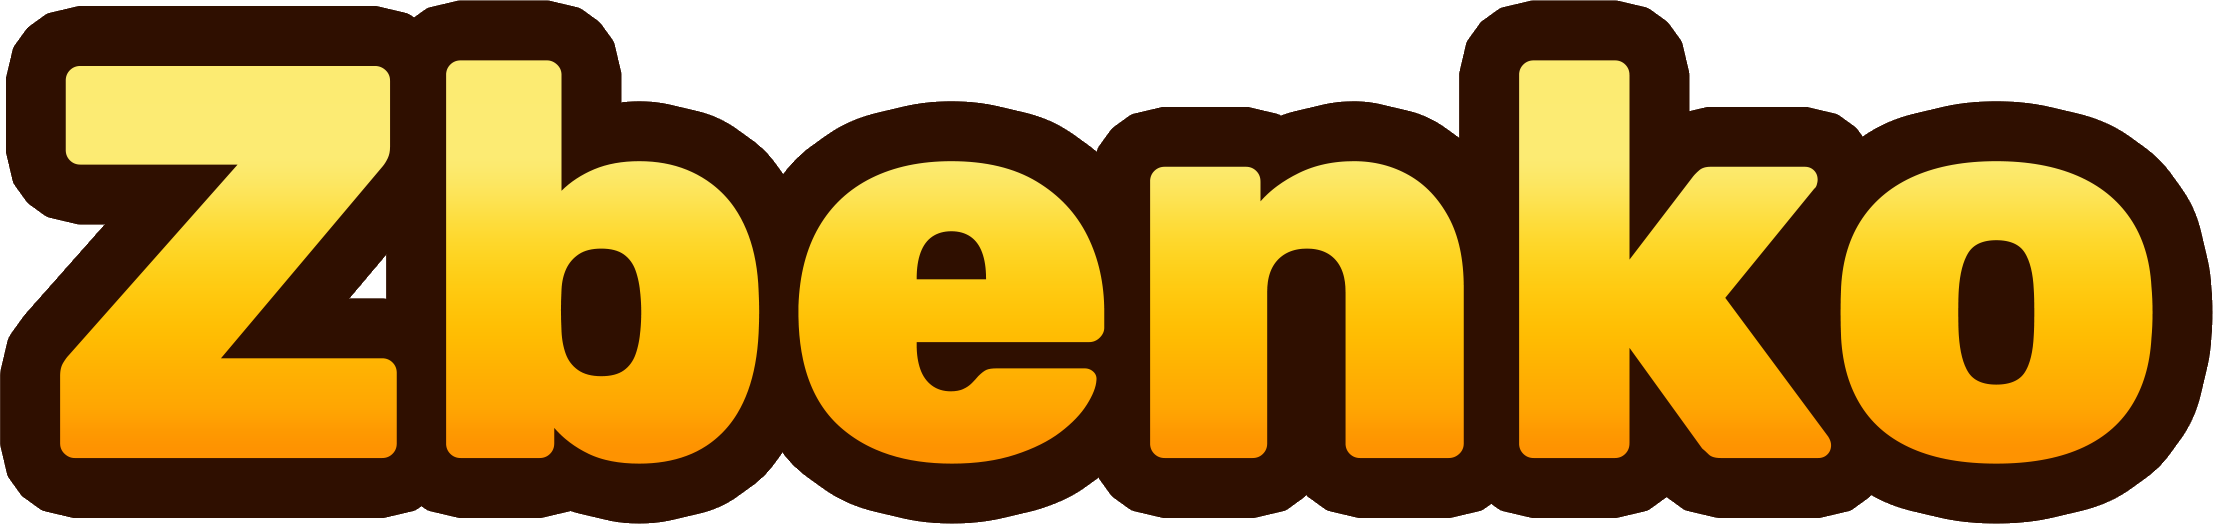 Zbenko logo